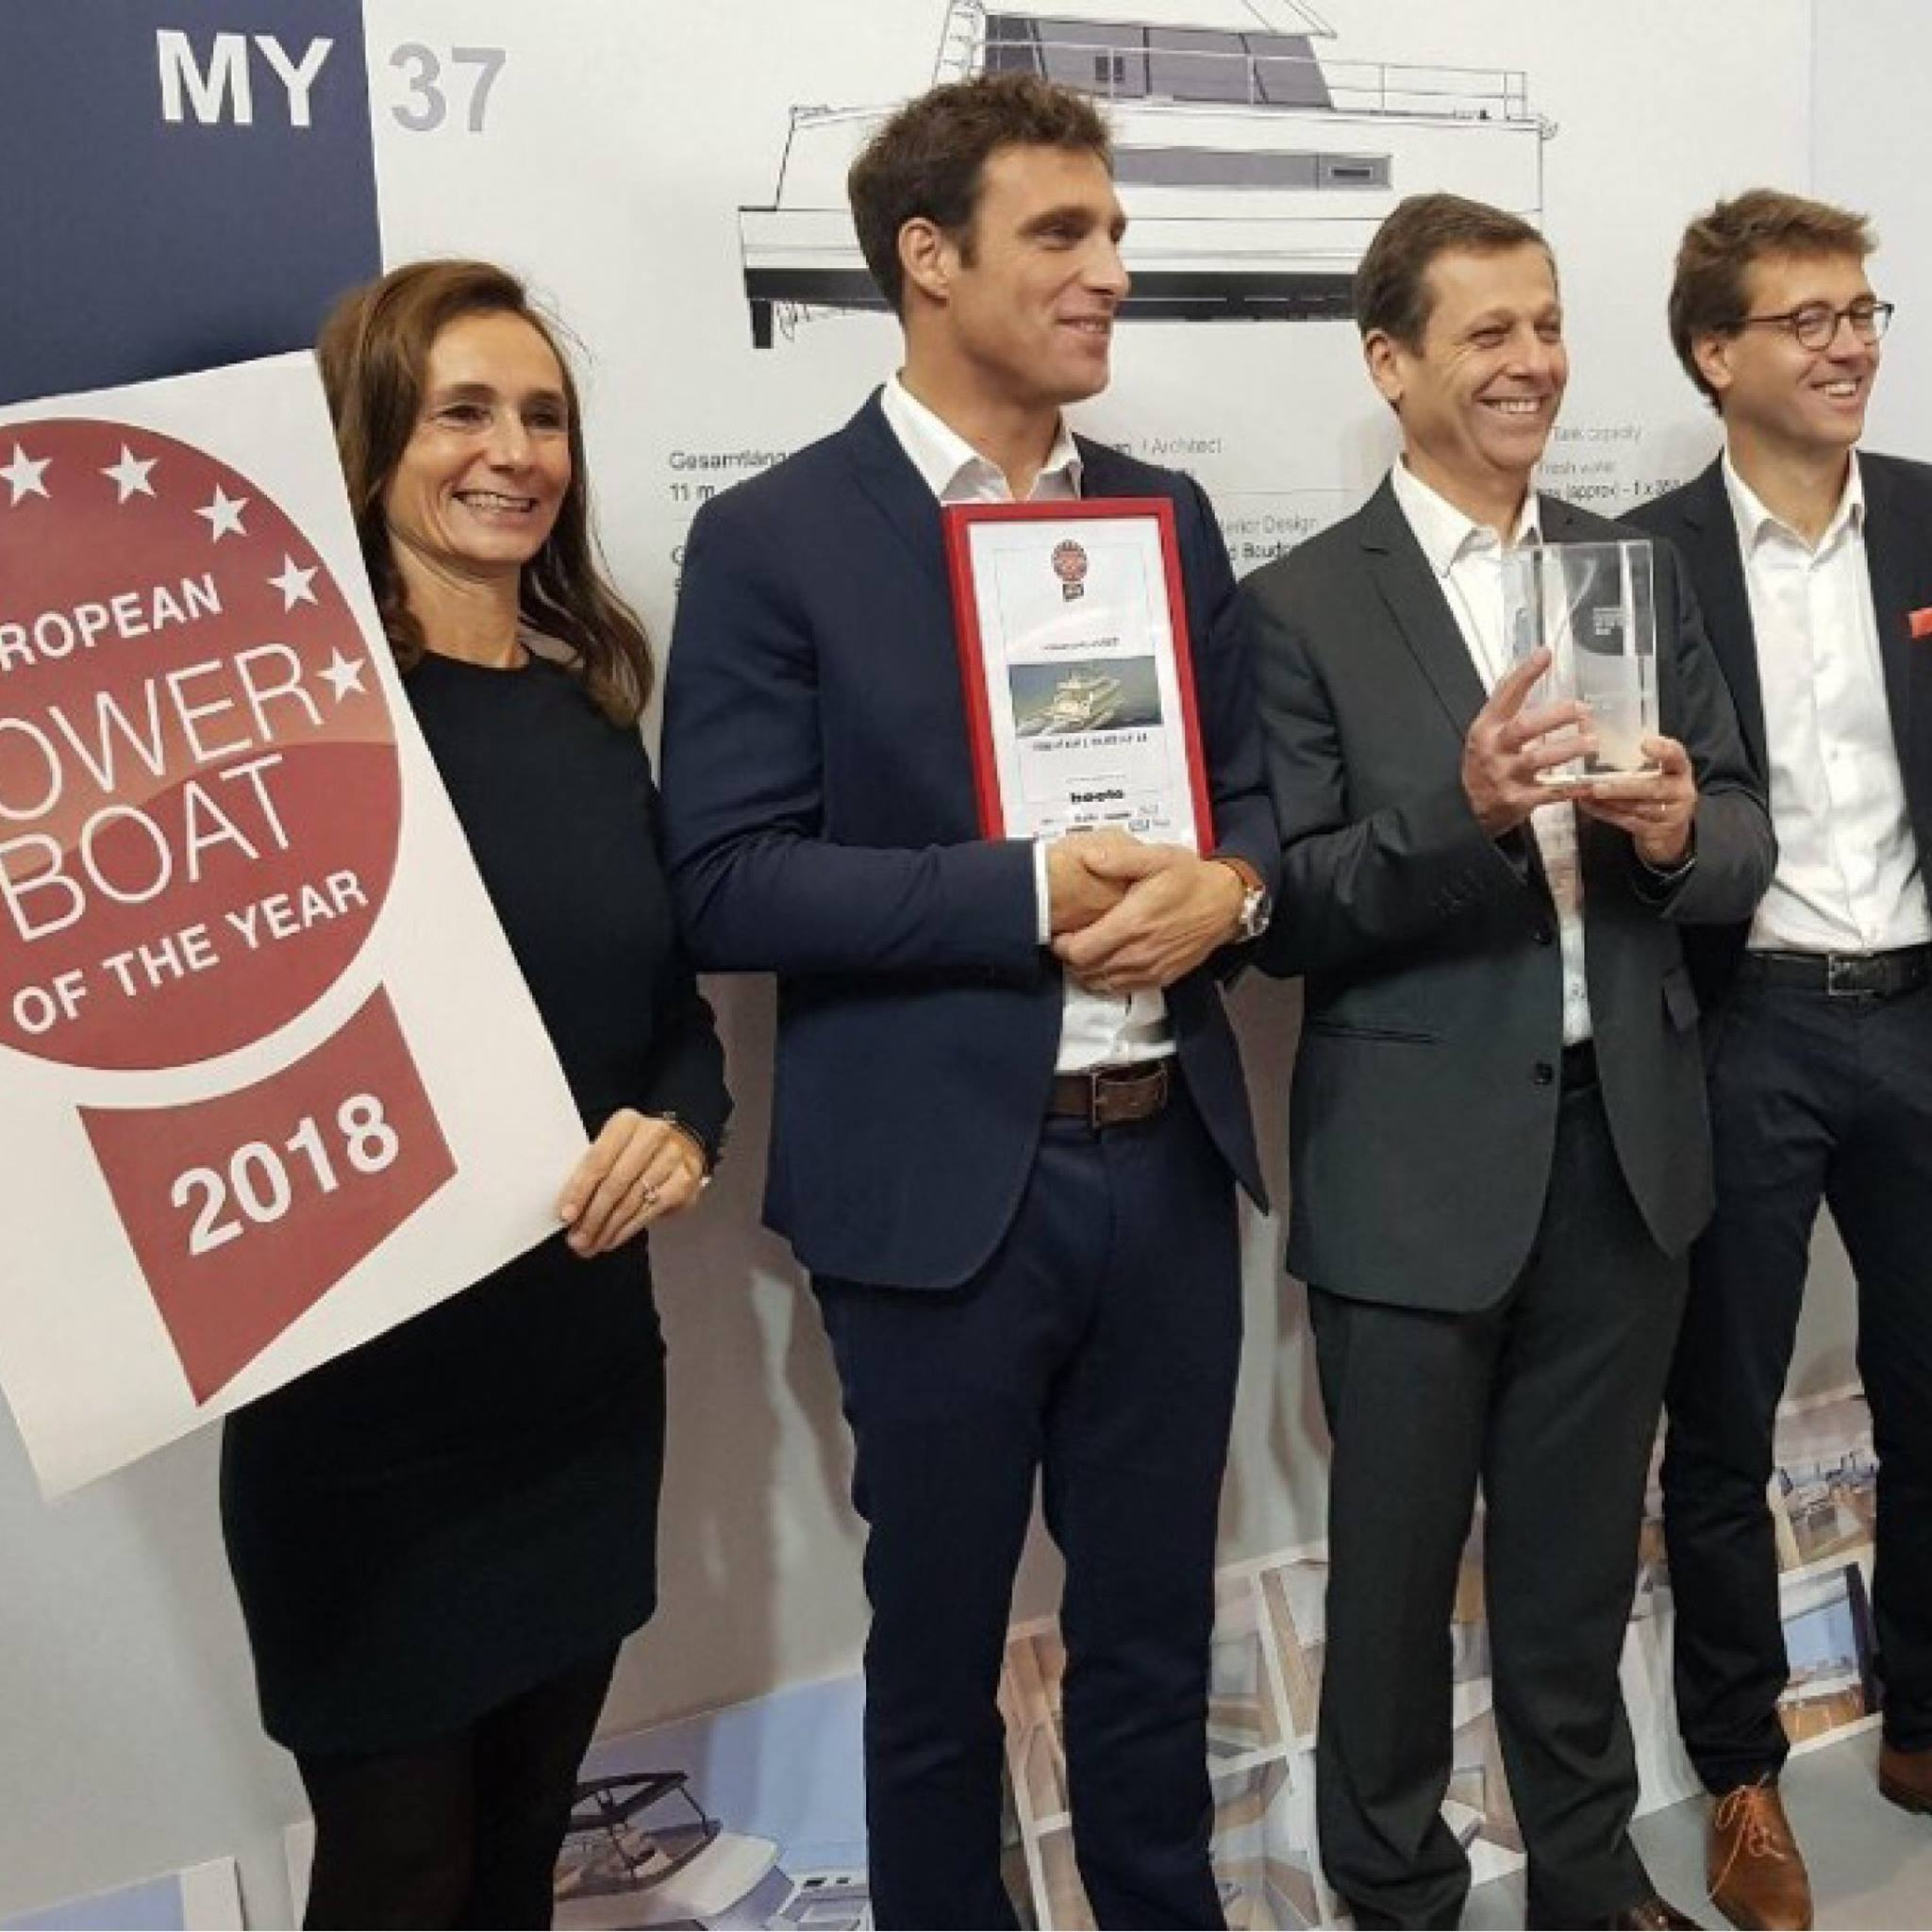 MY 44 Fountaine Pajot European Powerboat Award in BOOT Dusseldorf 2018